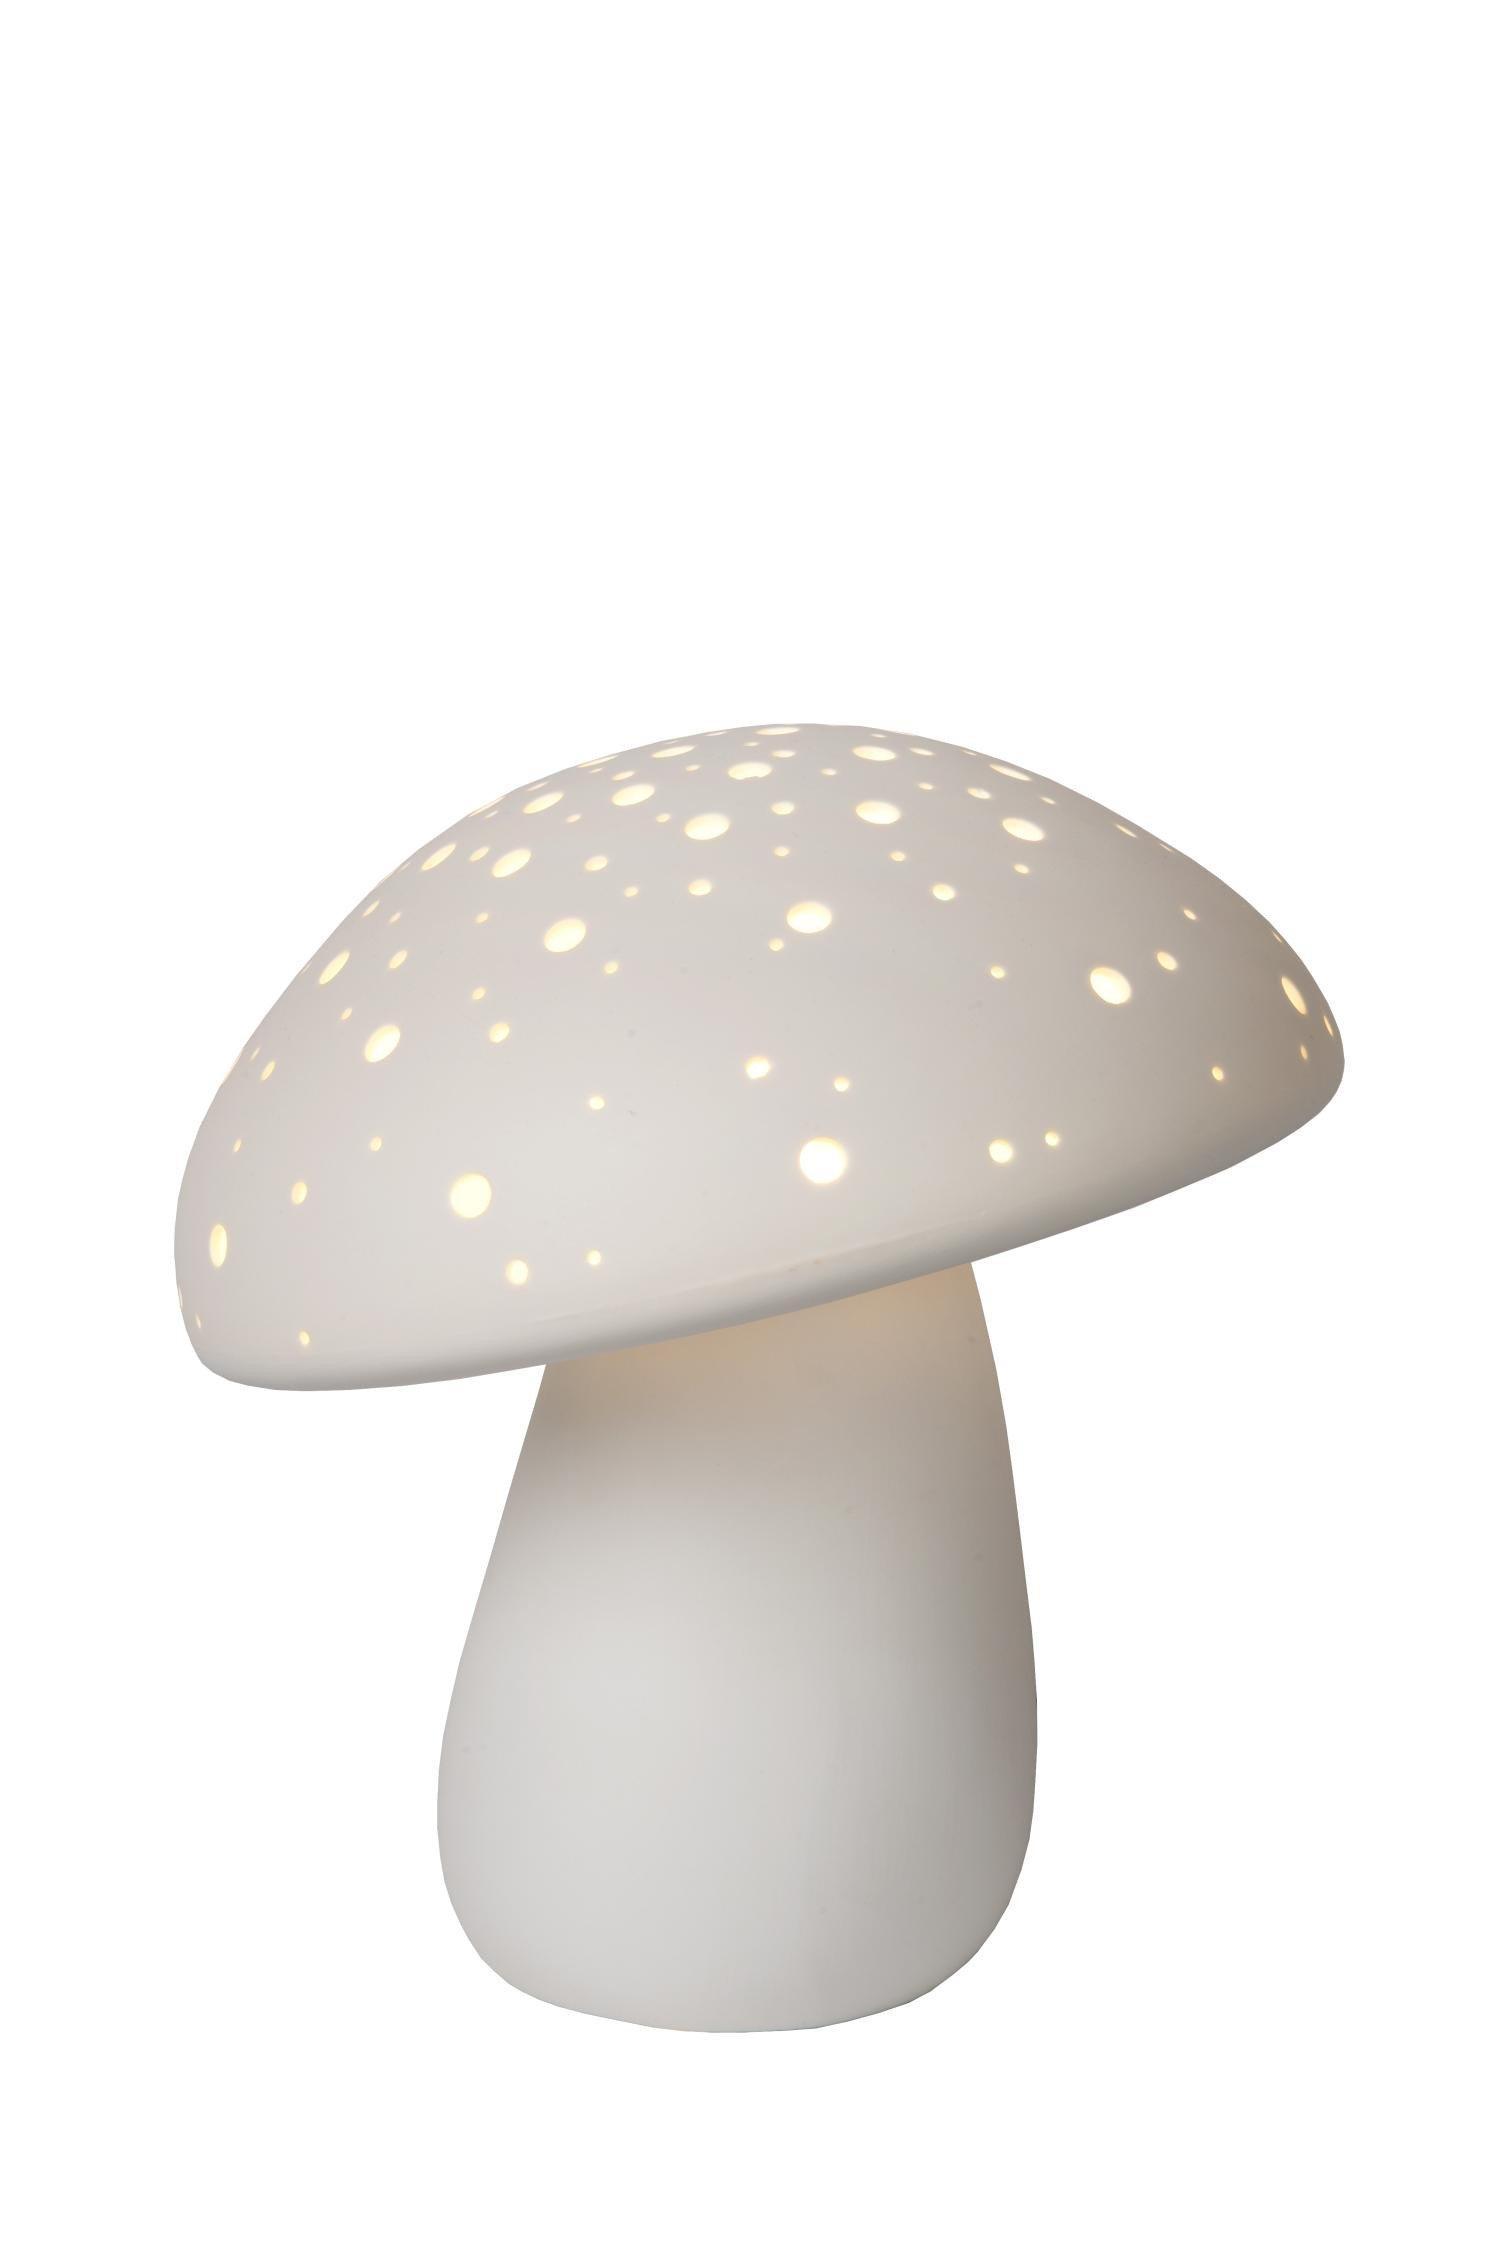 Lucide FUNGO Table Lamp Mushroom Shaped Indoor Stylish Cosy Night Desk Light